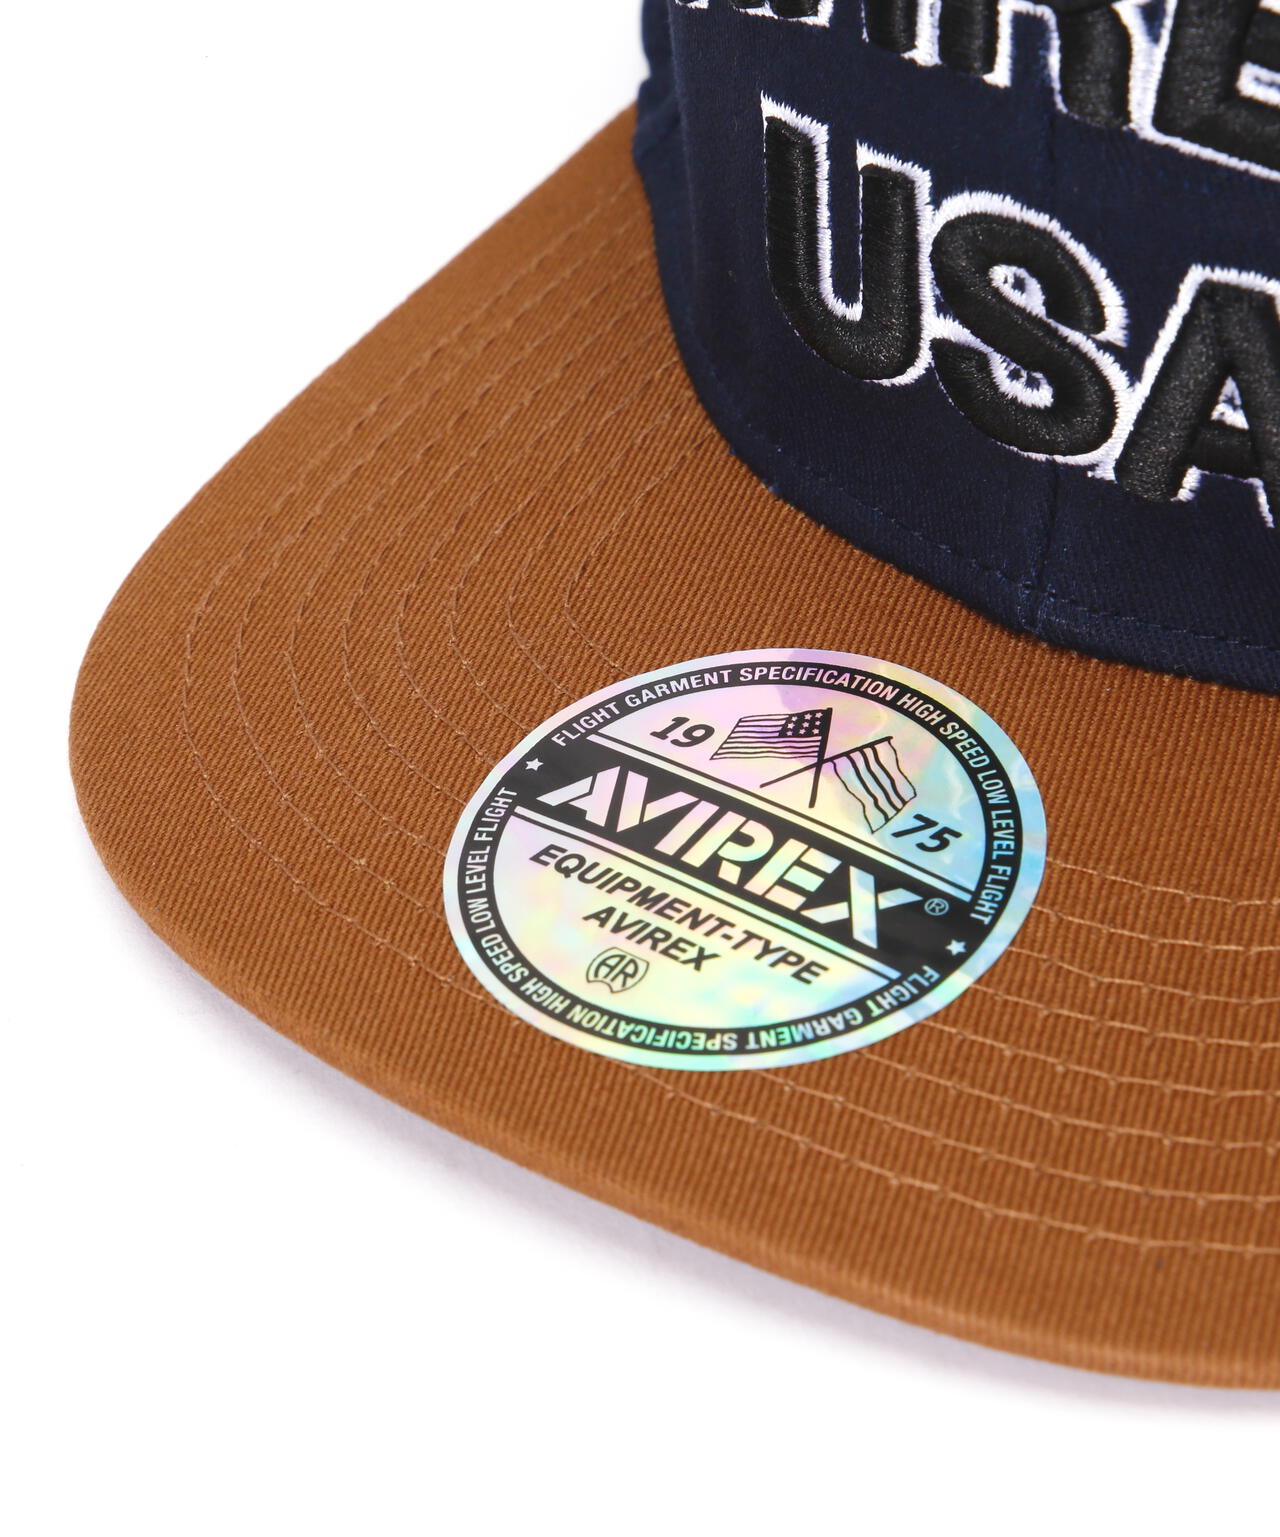 BB CAP AVIREX USA /ベースボールキャップ AVIREX USA